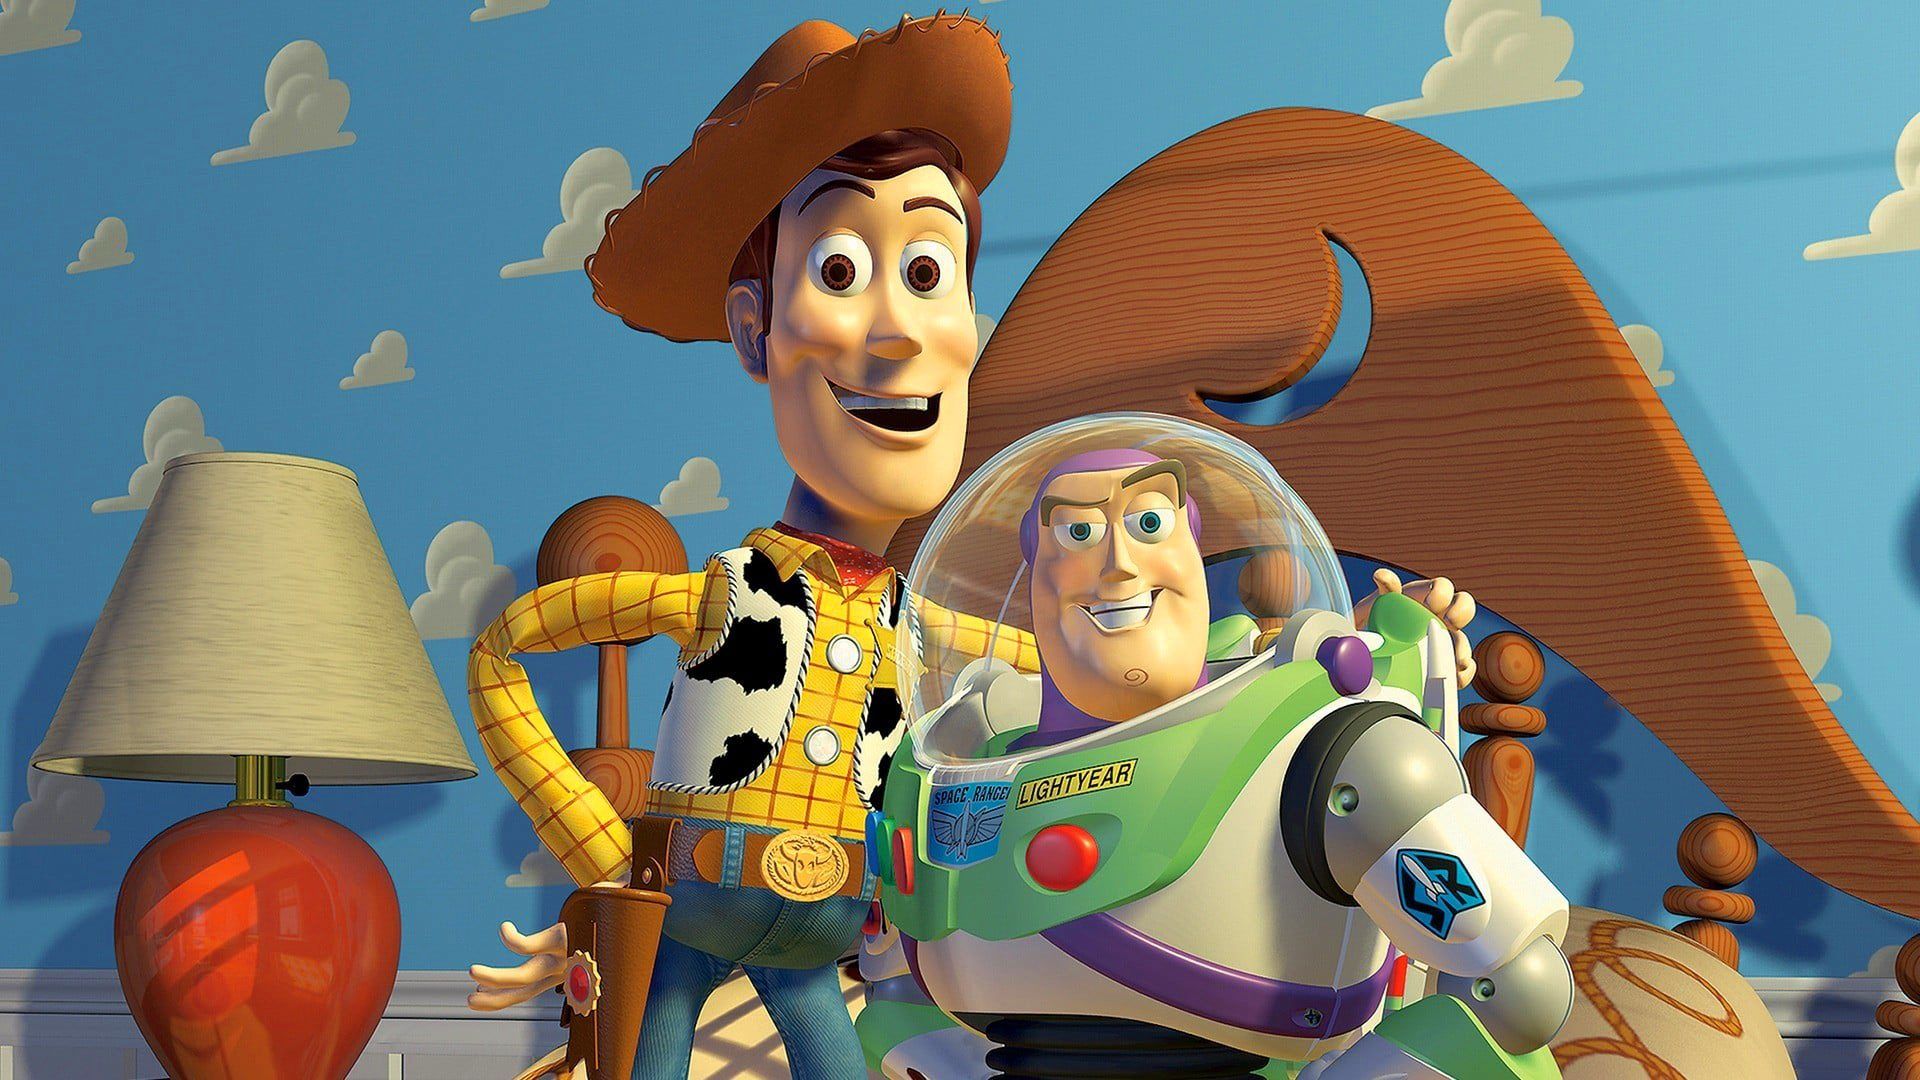 Toy Story 5 & Andy's Most Anticipated Comeback. - Asiana TimesPreronaRoy